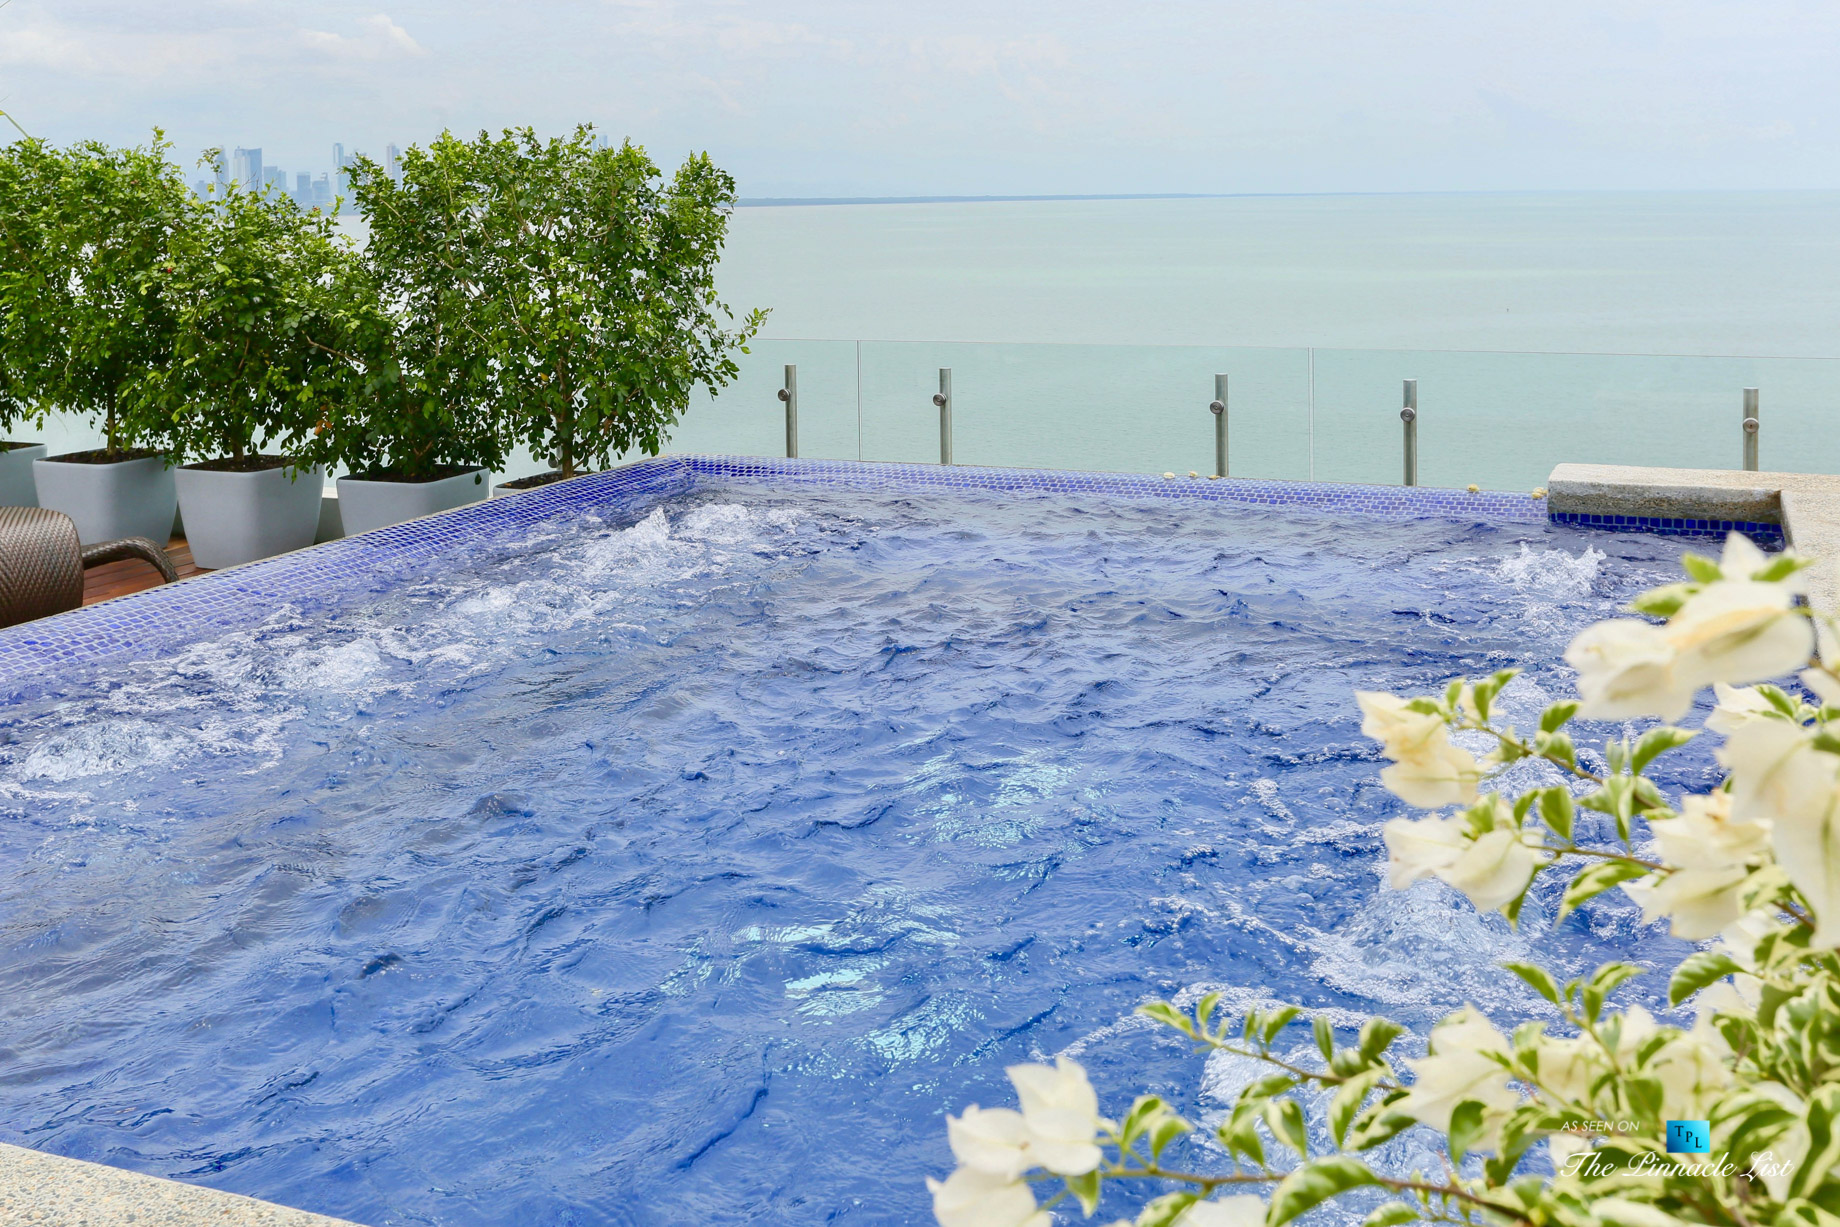 Thr3e Level Penthouse – Ocean Reef Island, Panama – Luxury Real Estate